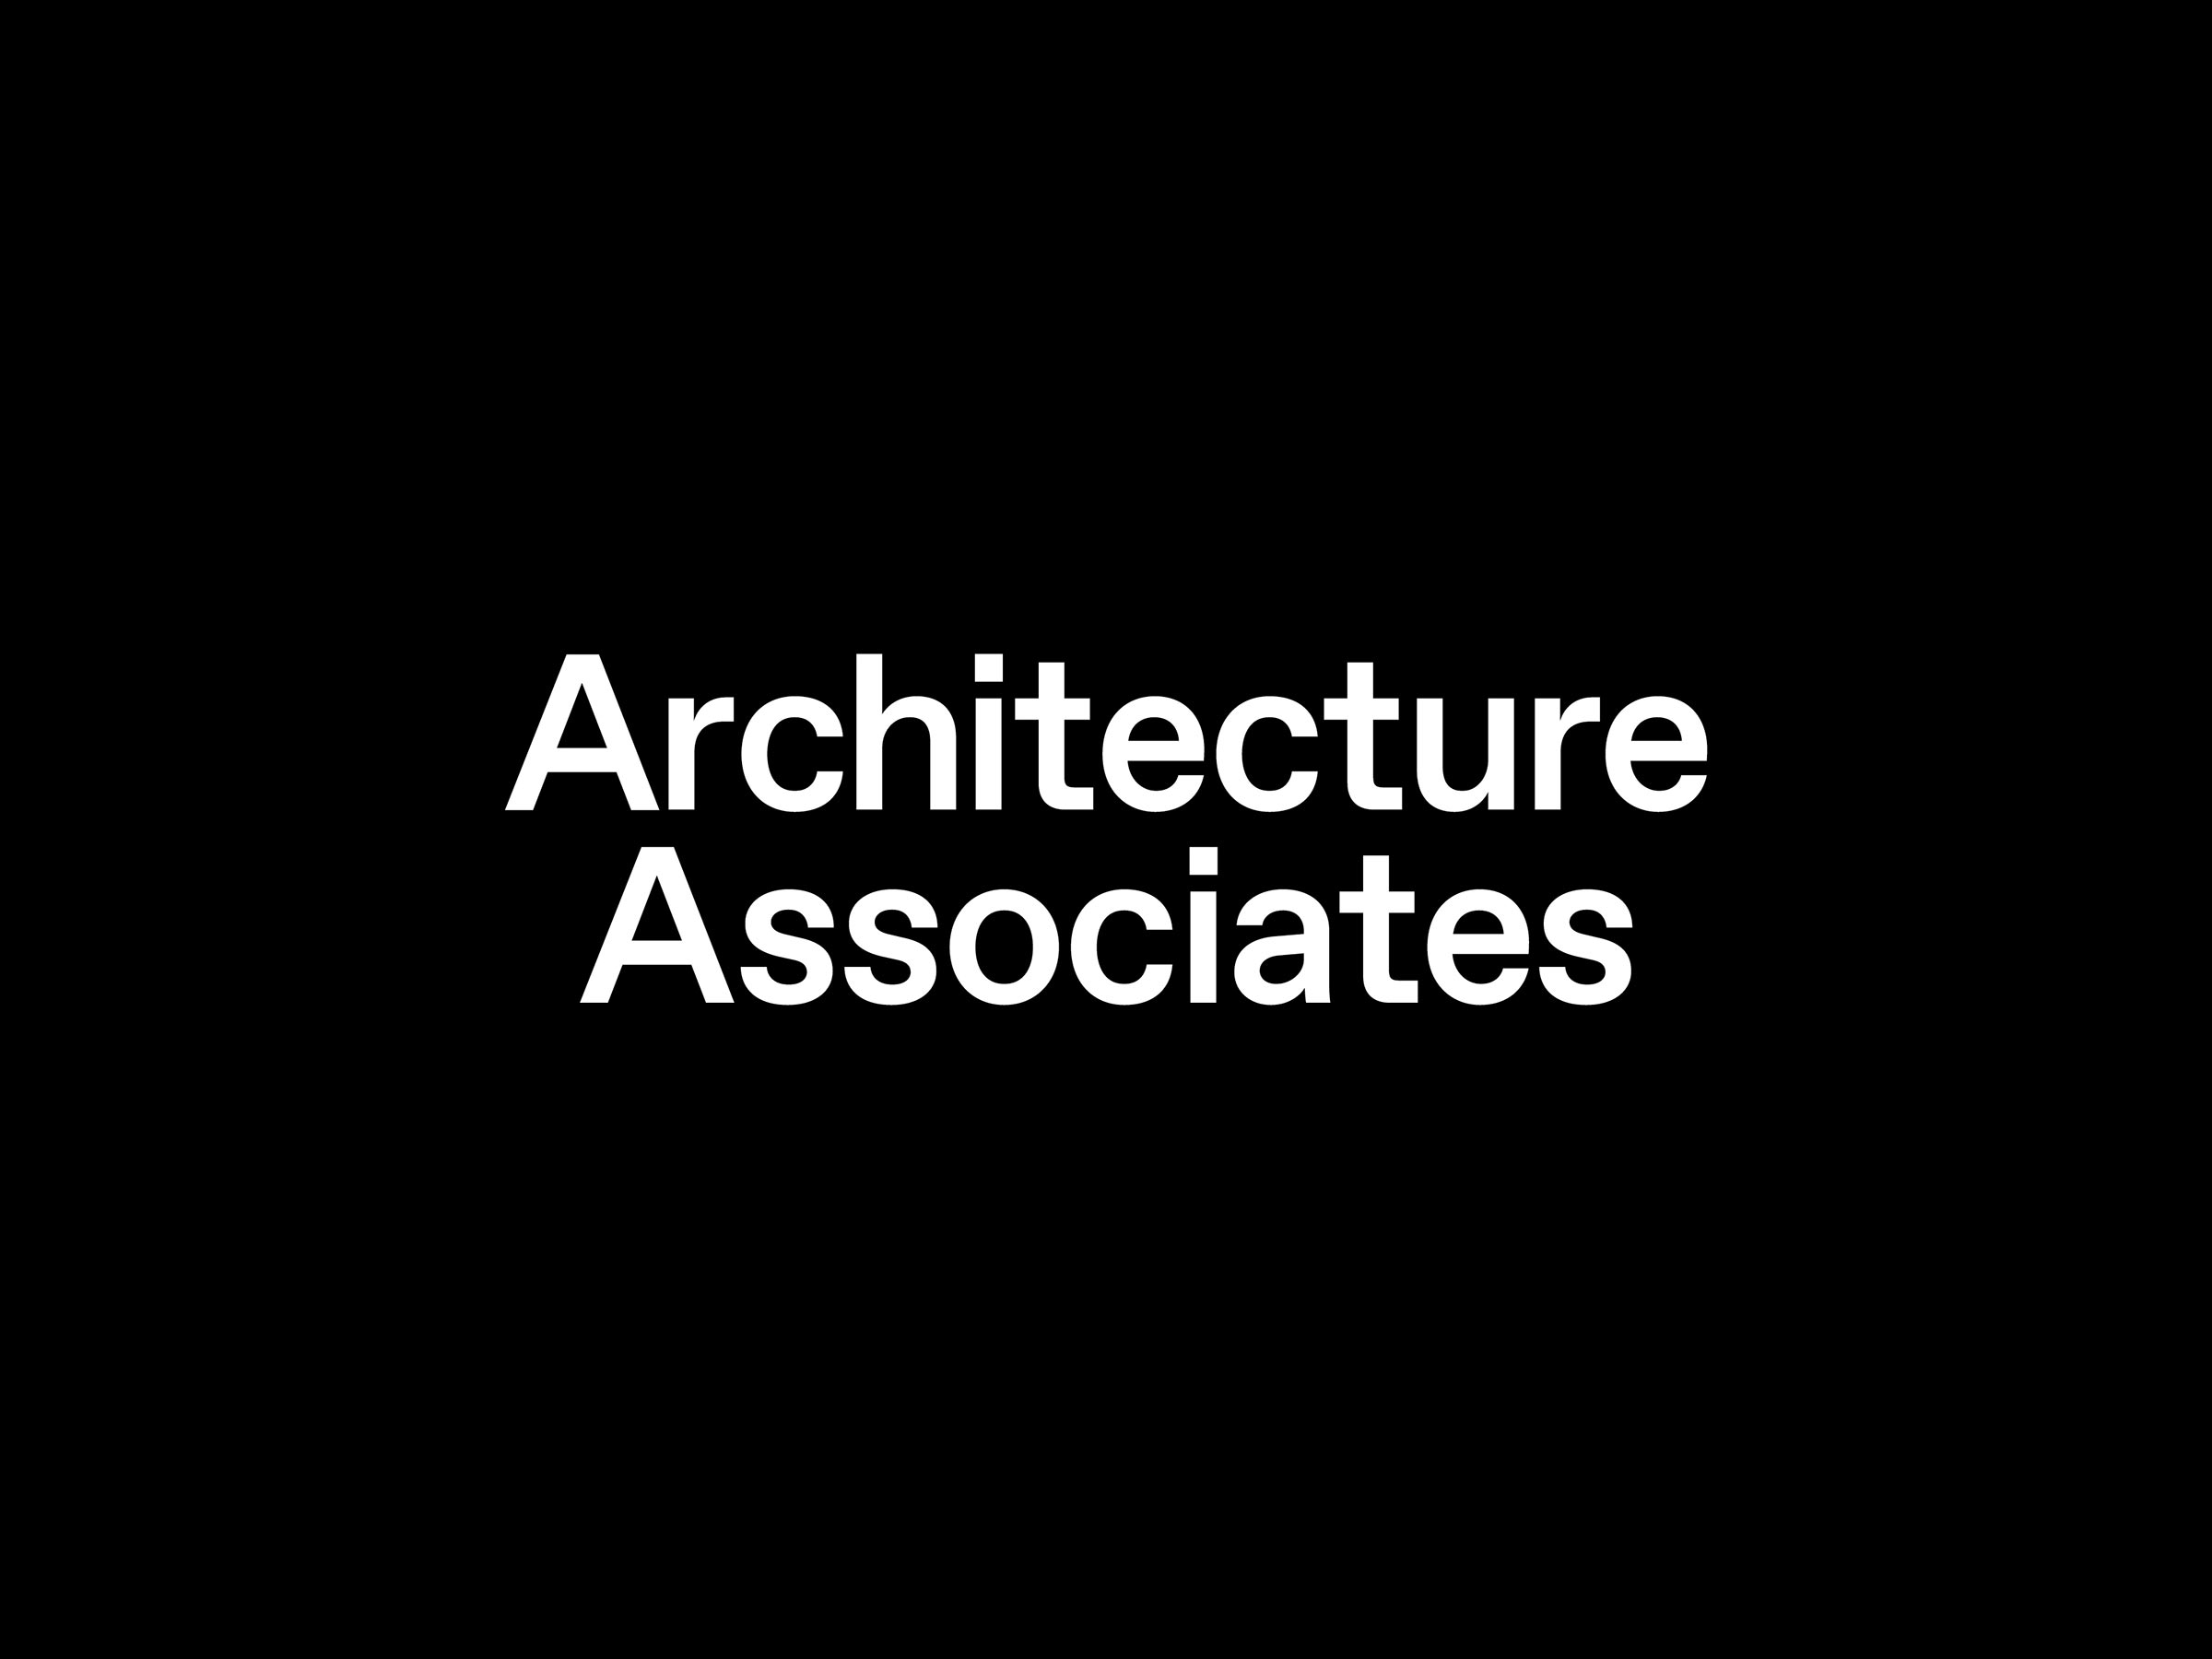 Architecture Associates